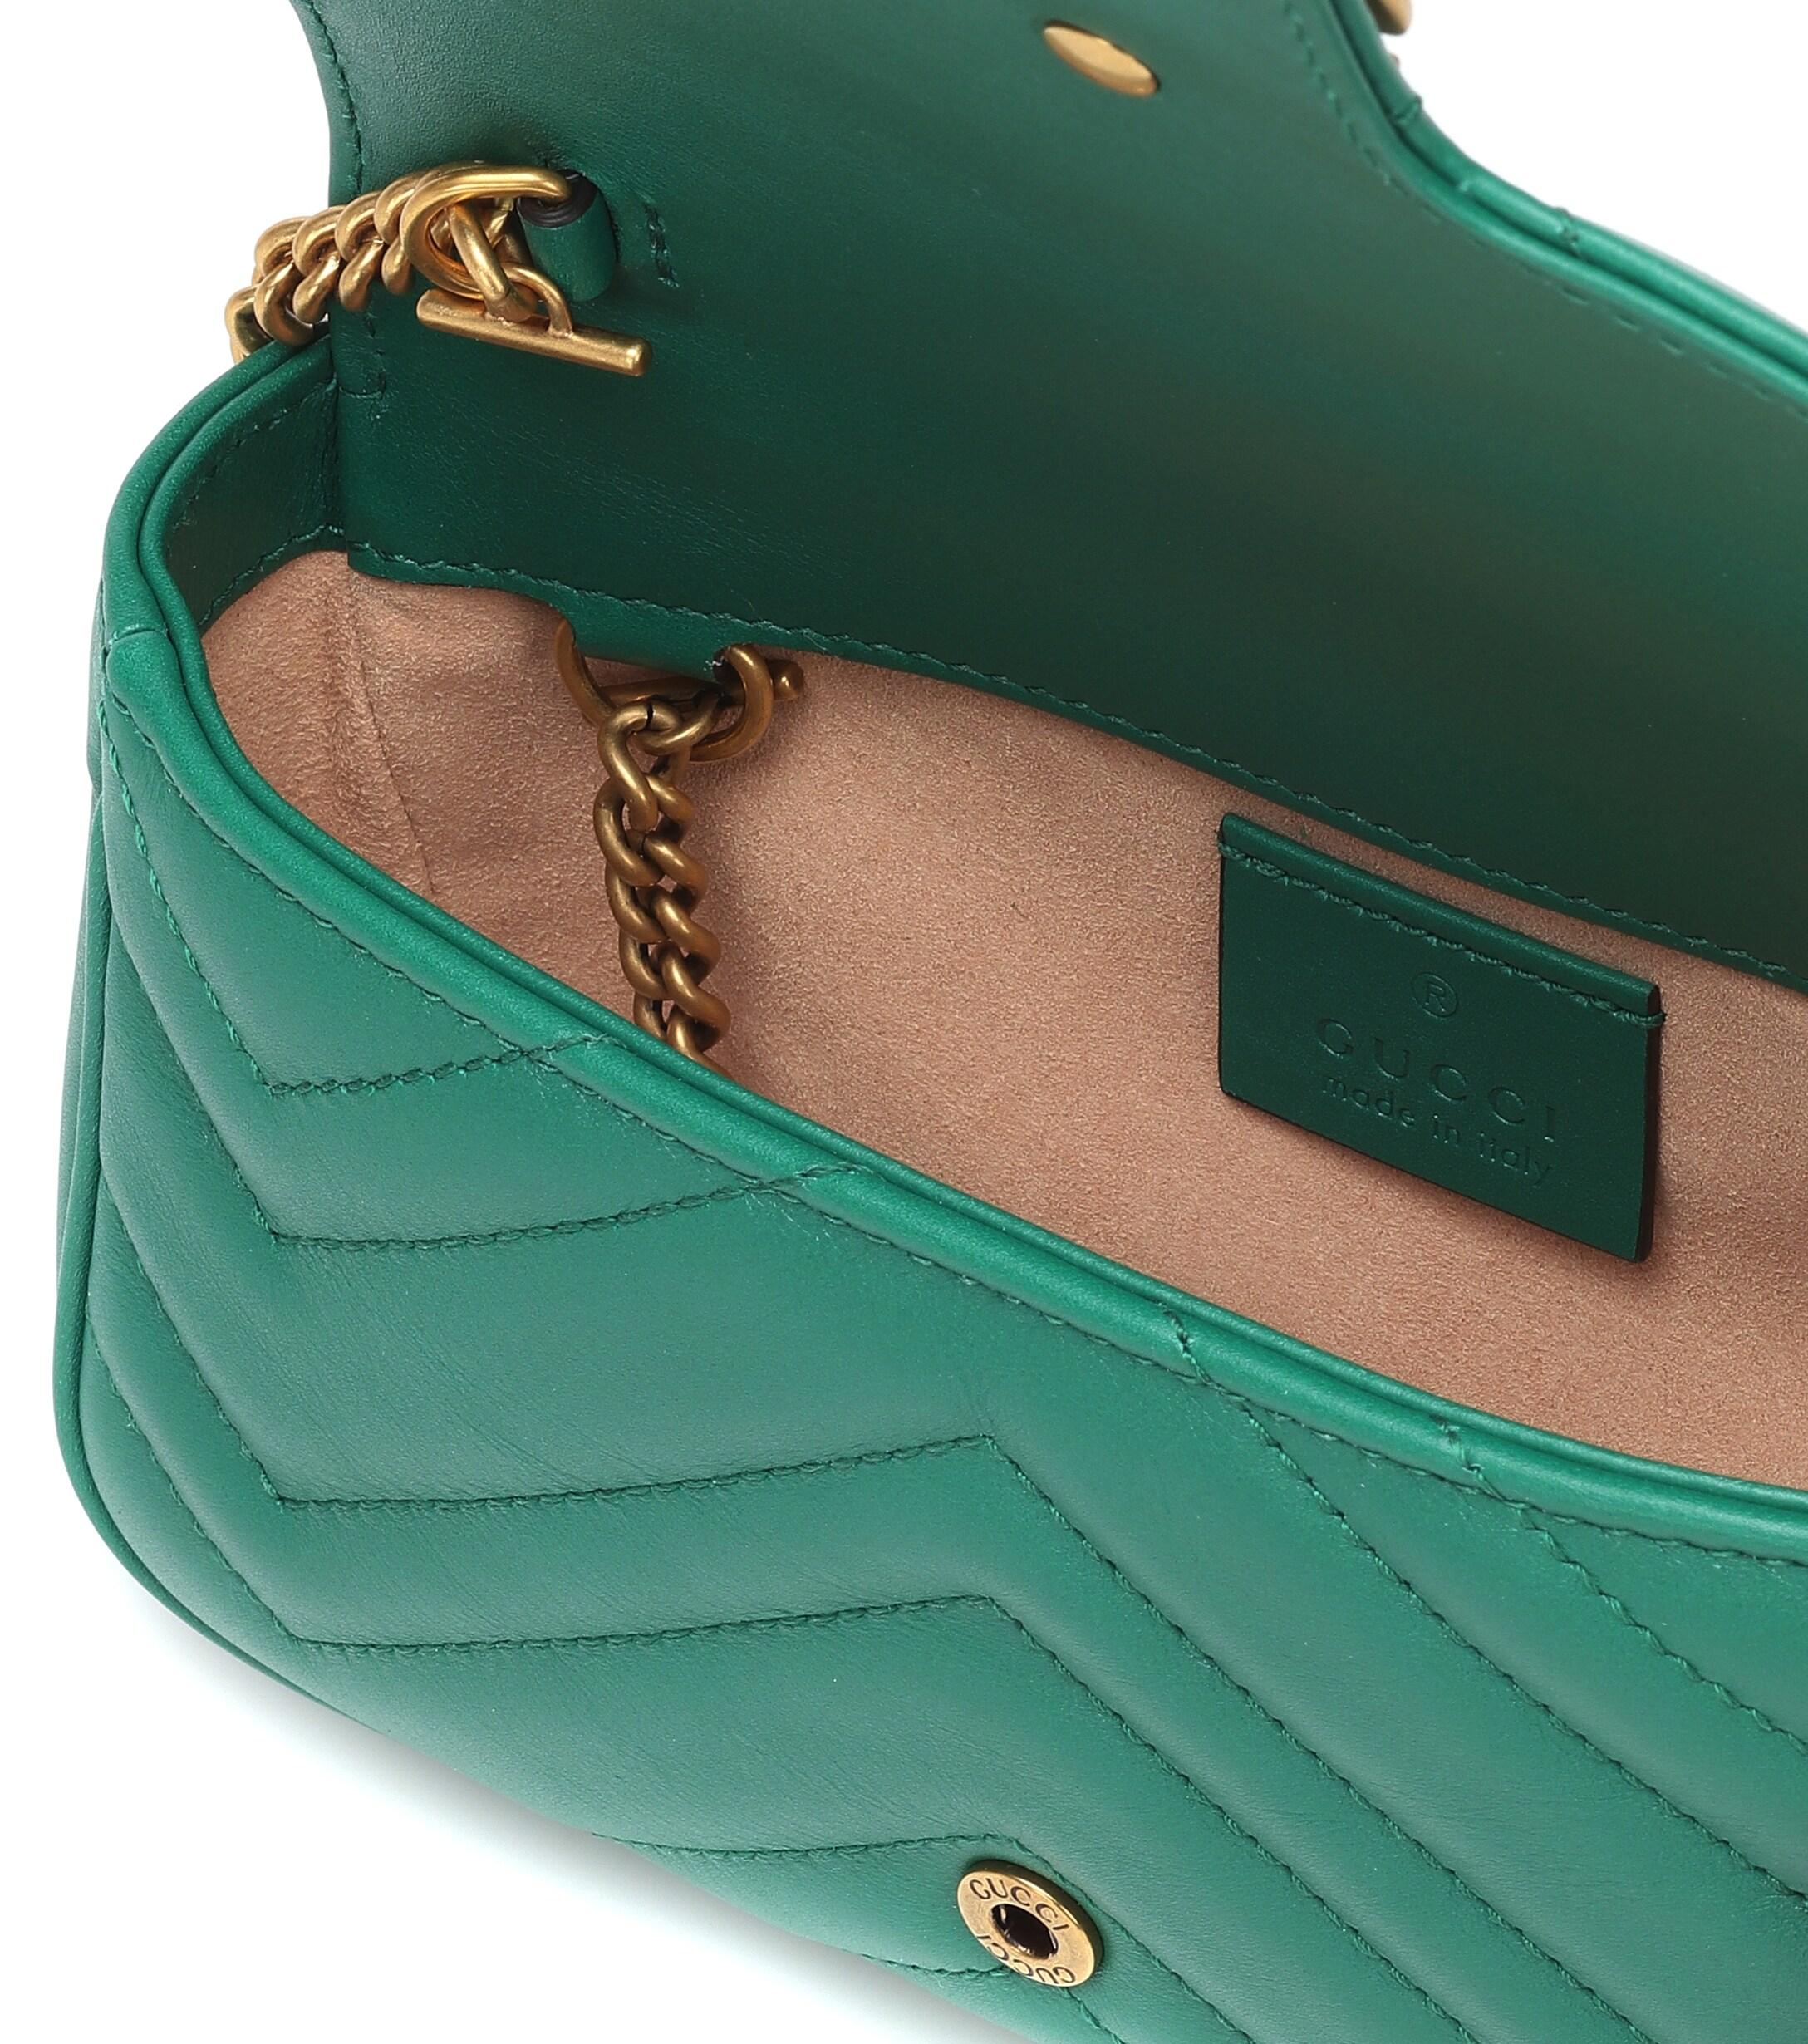 Gucci GG Marmont Super Mini Shoulder Bag in Emerald,Emerald (Green) - Lyst